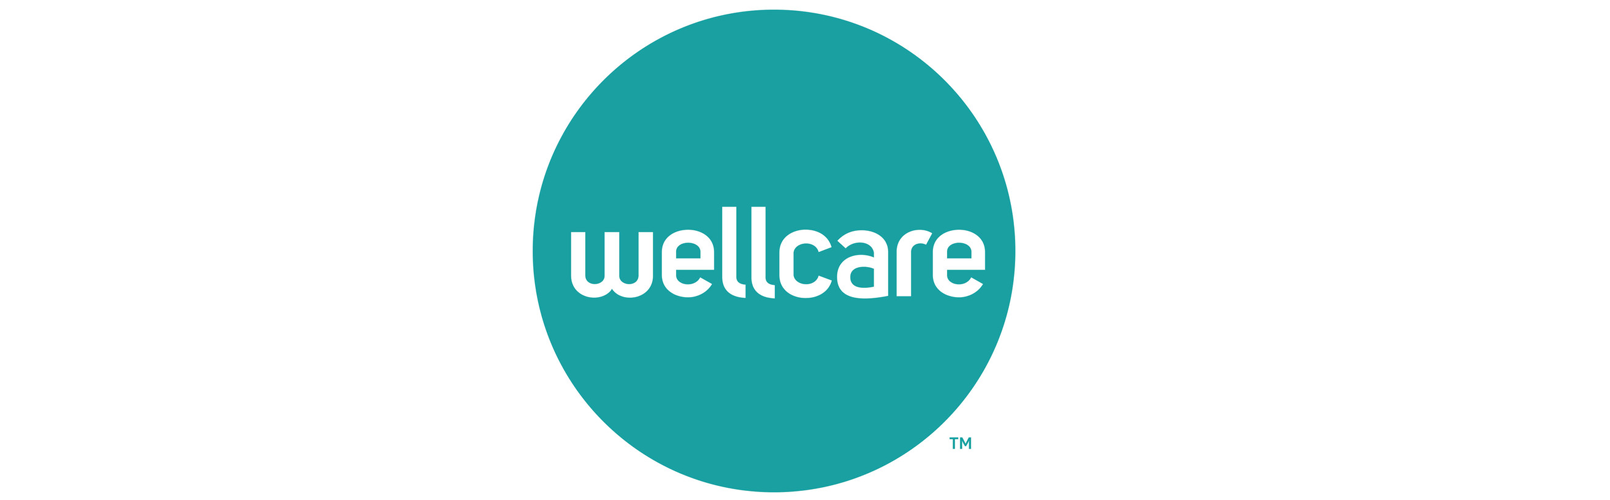 Insurance-Wellcare